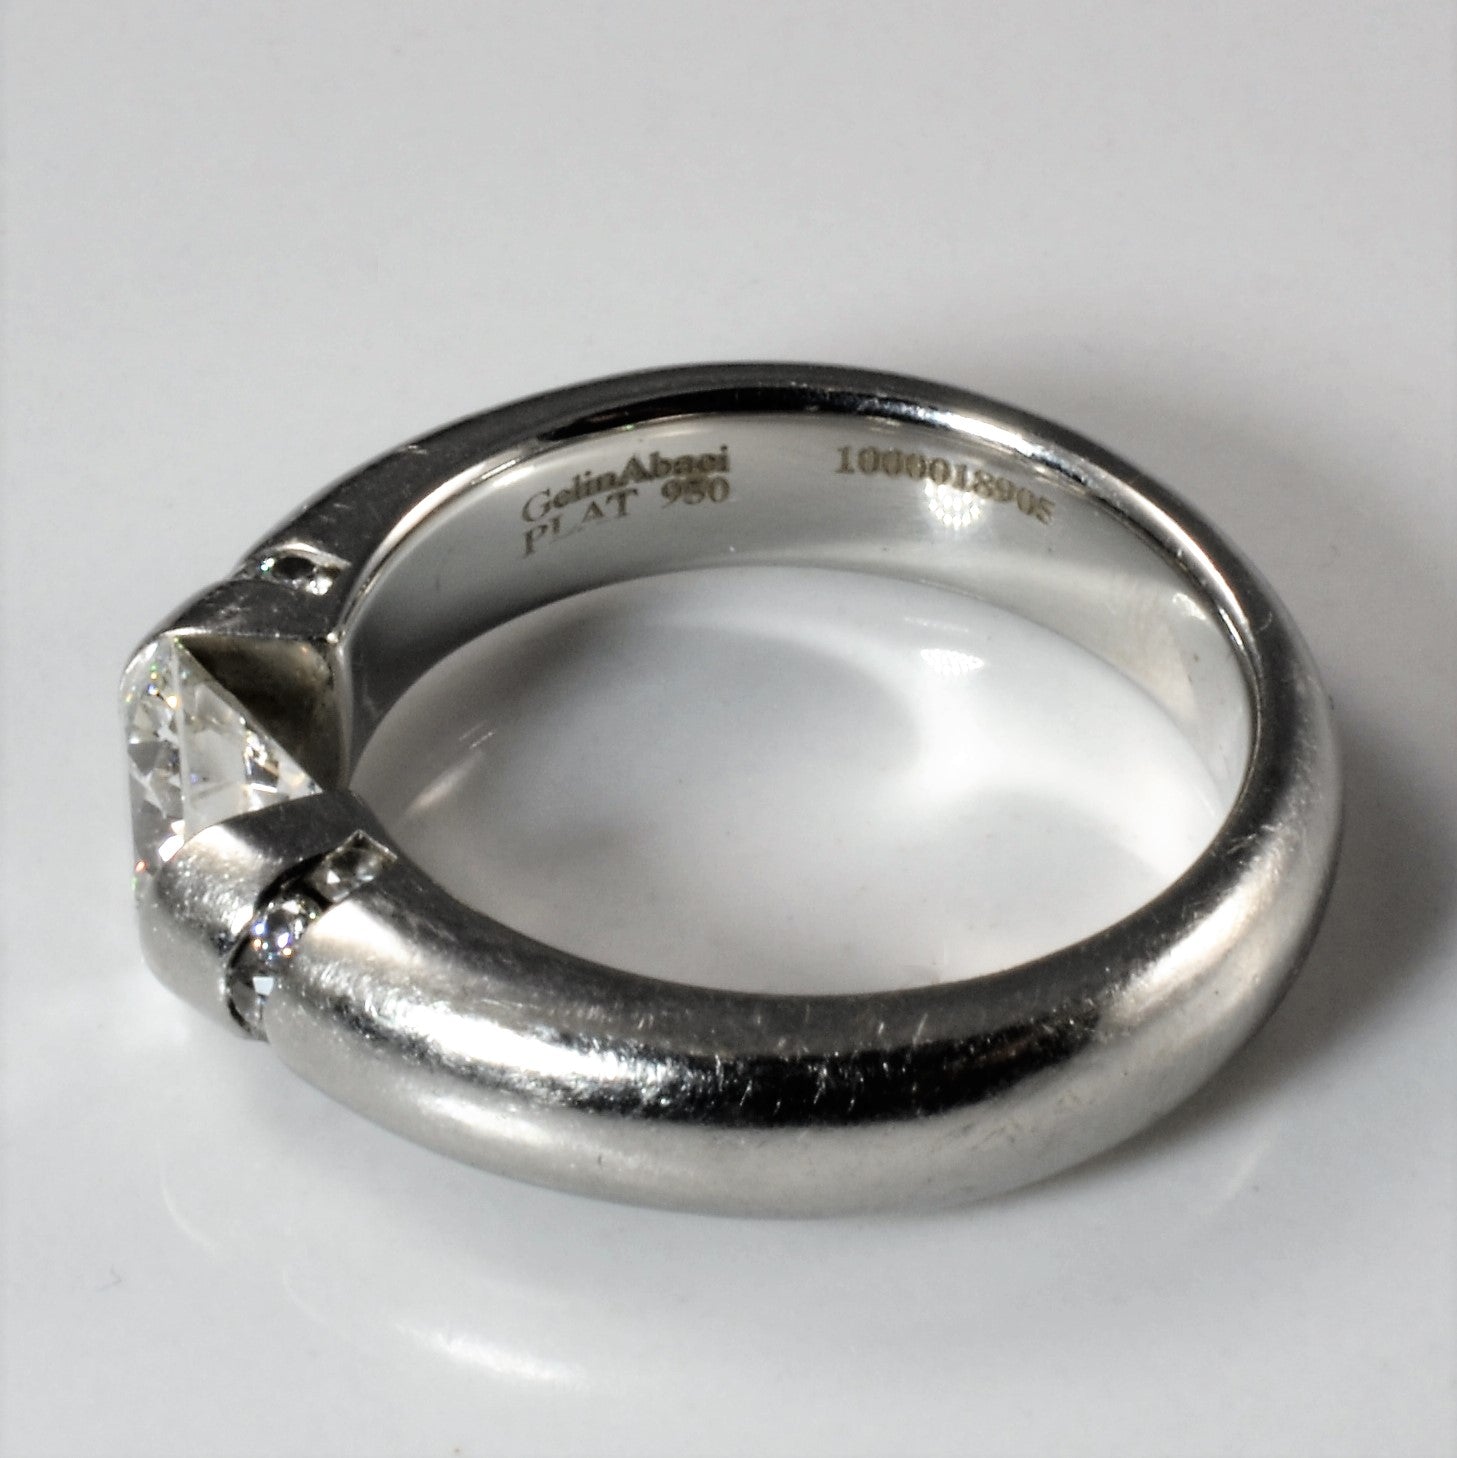 Gelin Abaci' Tension Set Diamond Engagement Ring | 1.29 ctw, SZ 6.75 |